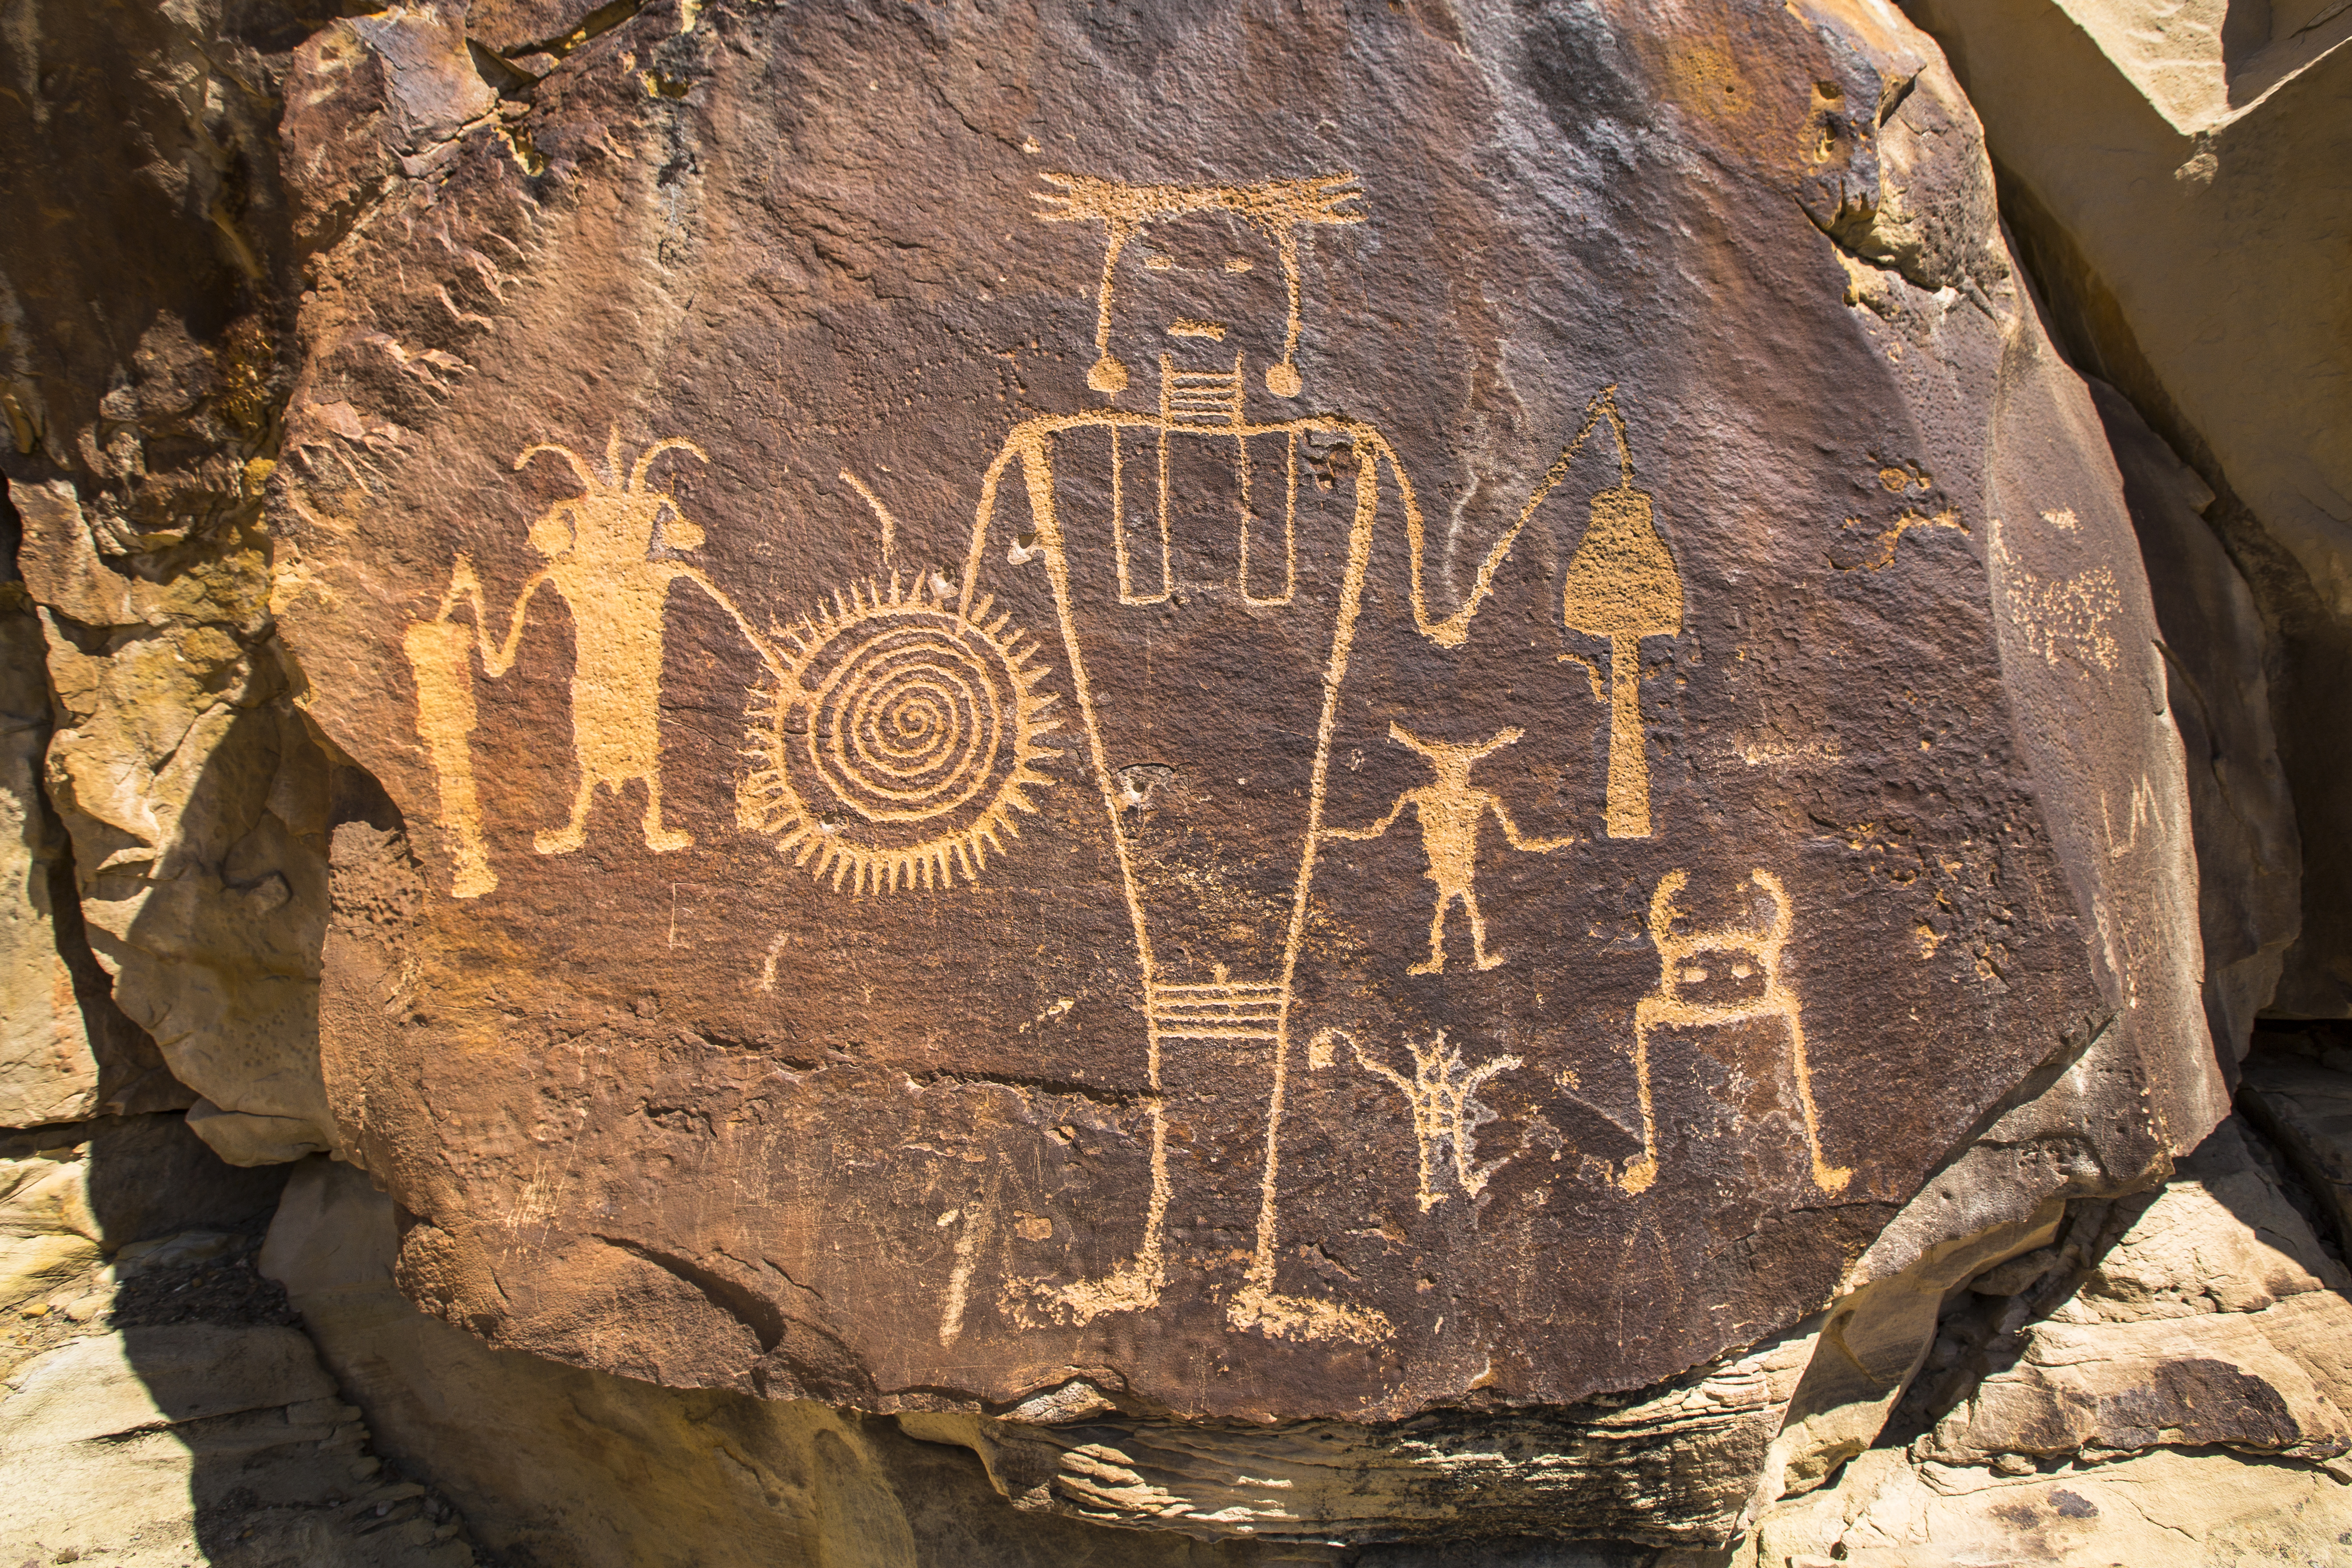 Ancestral Native American rock art at McKee Springs